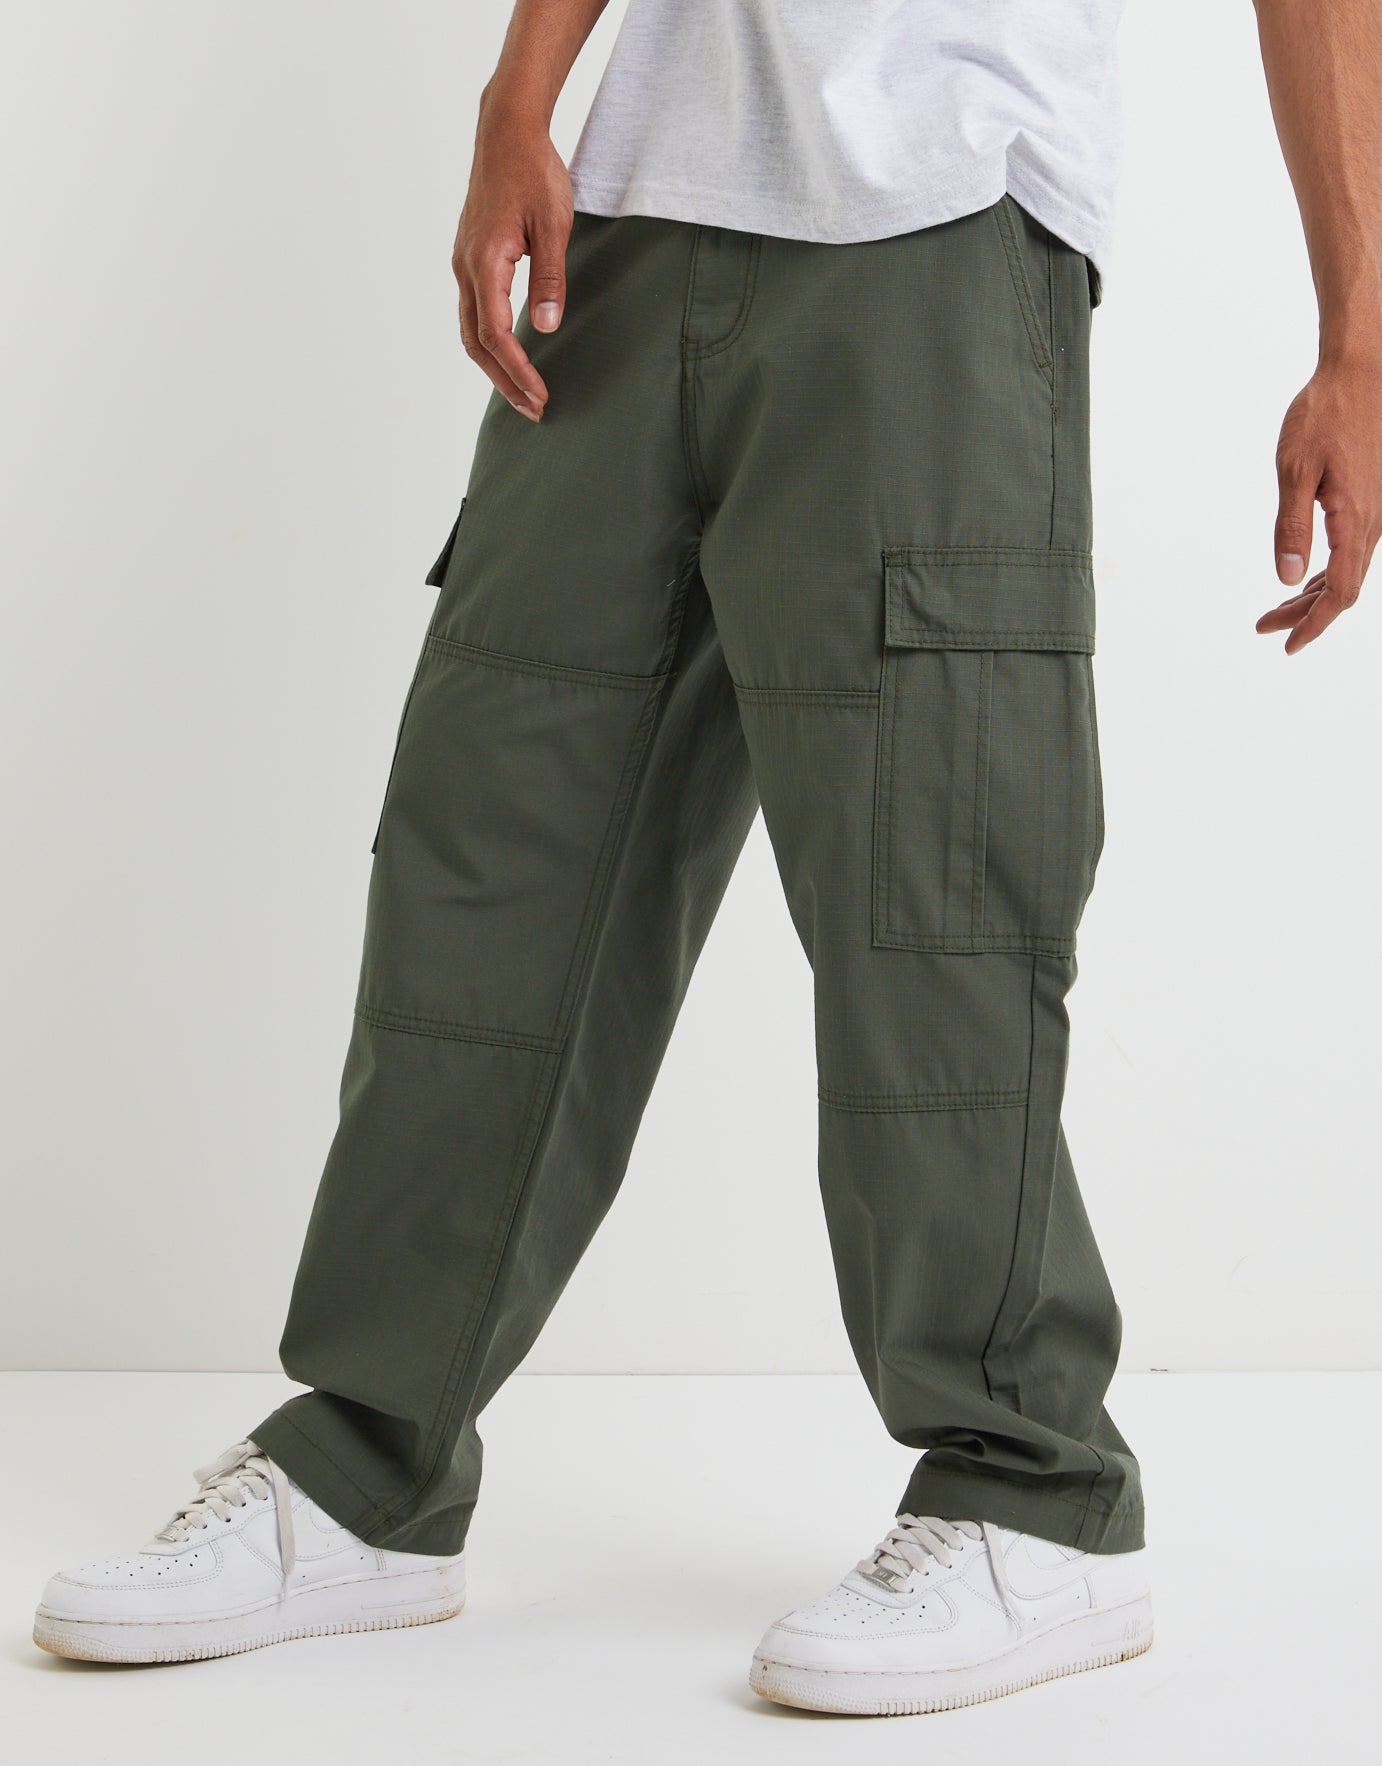 Buy Olive Green Cargo Pants for Men Online in India Beyoung